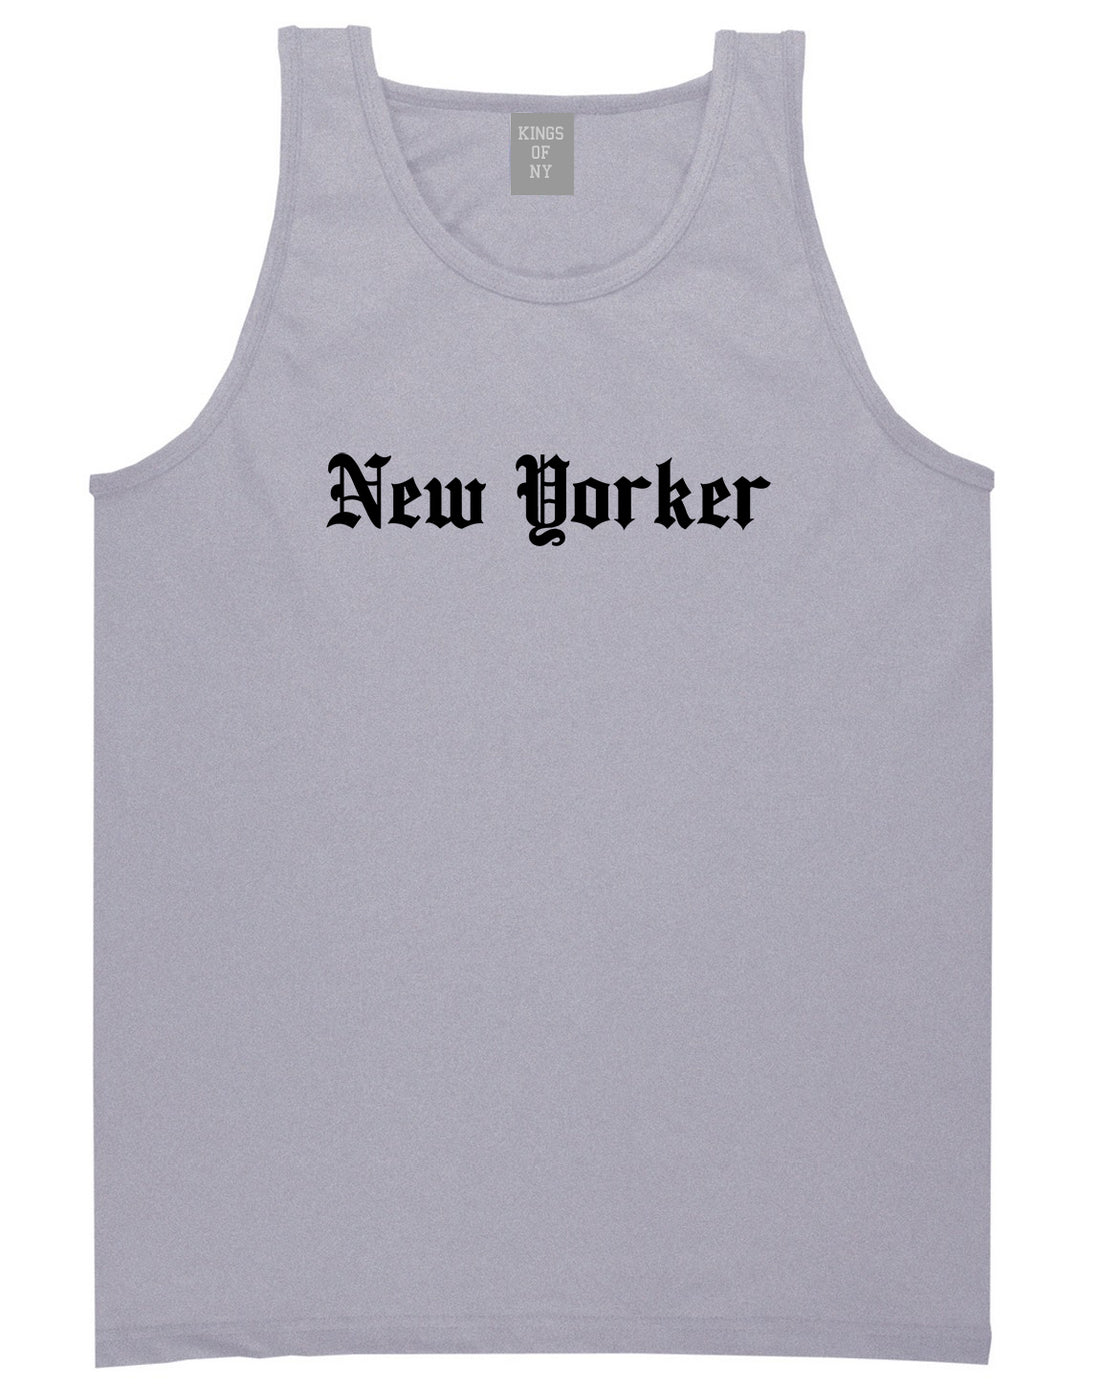 New Yorker Old English Mens Tank Top Shirt Grey by Kings Of NY